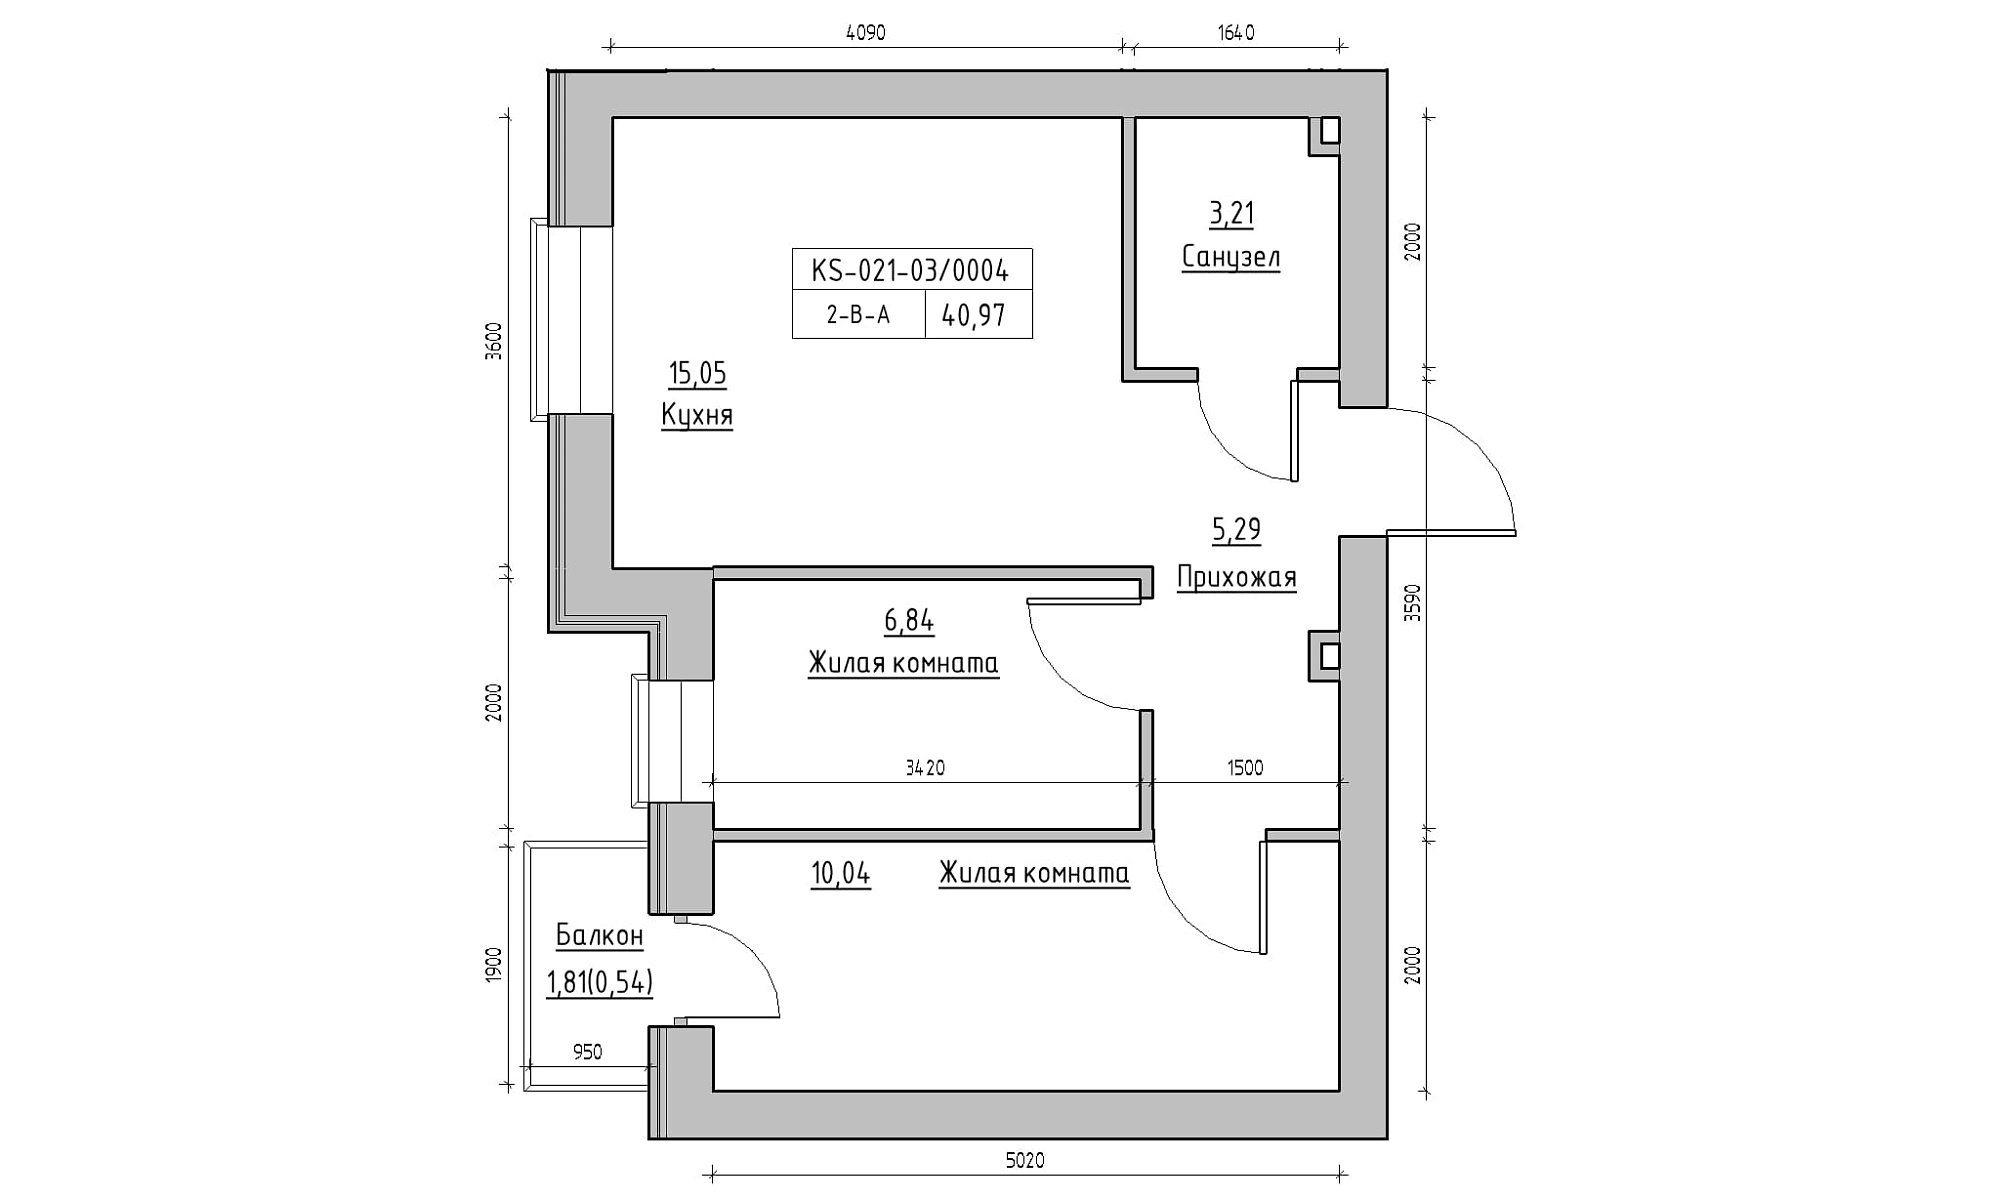 Planning 2-rm flats area 40.97m2, KS-021-03/0004.